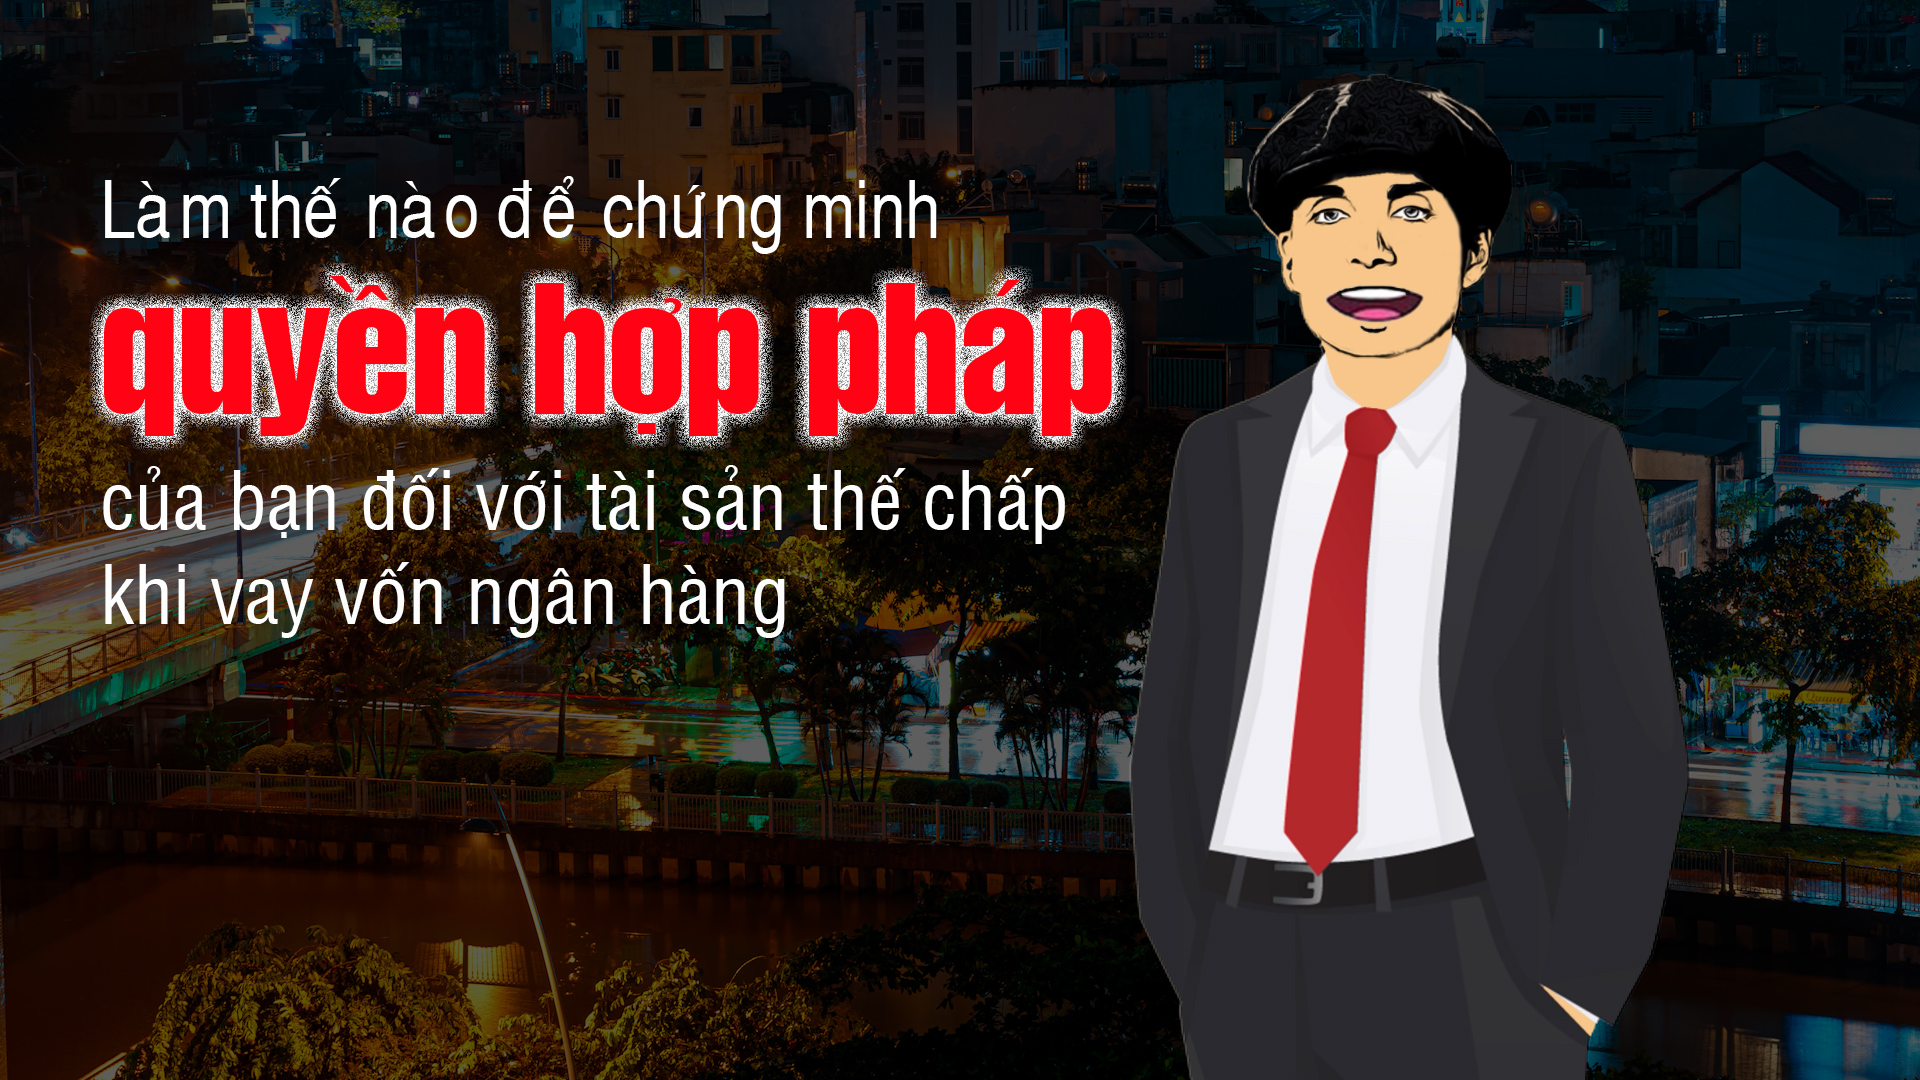 Chung minh quyen hop phap voi tai san the chap